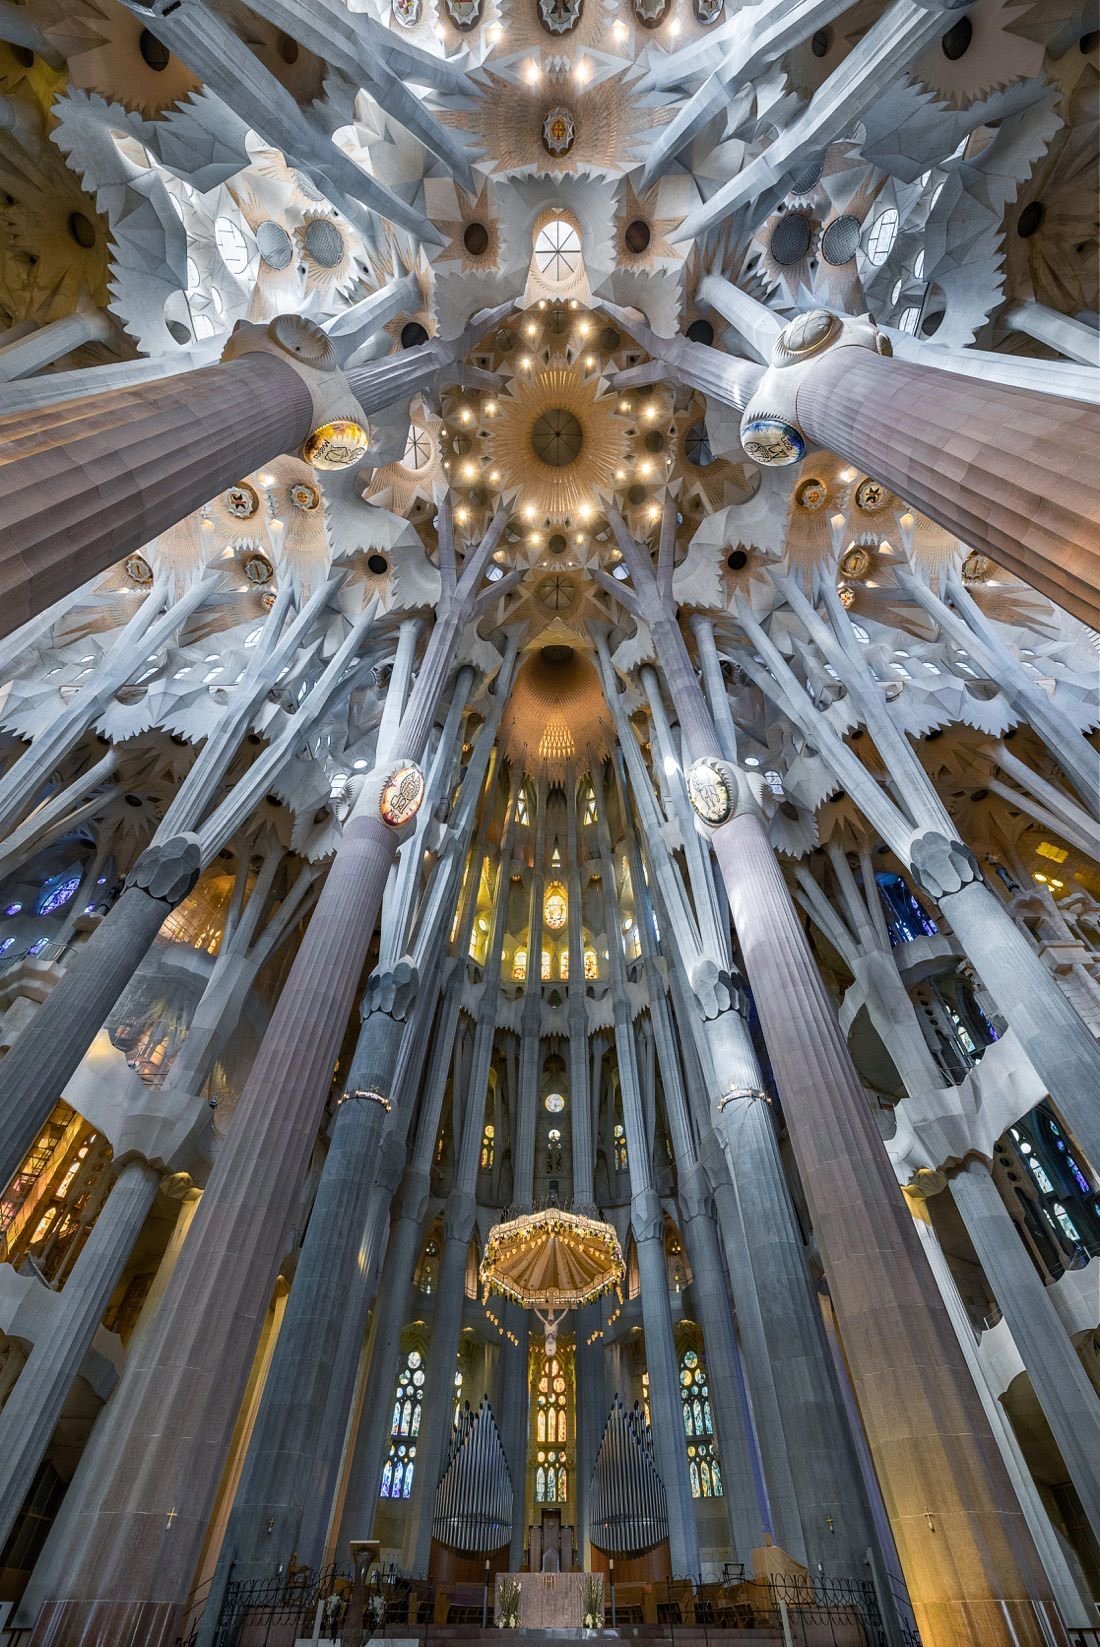 La-Sagrada-Familia-ceiling-01 copy.jpg